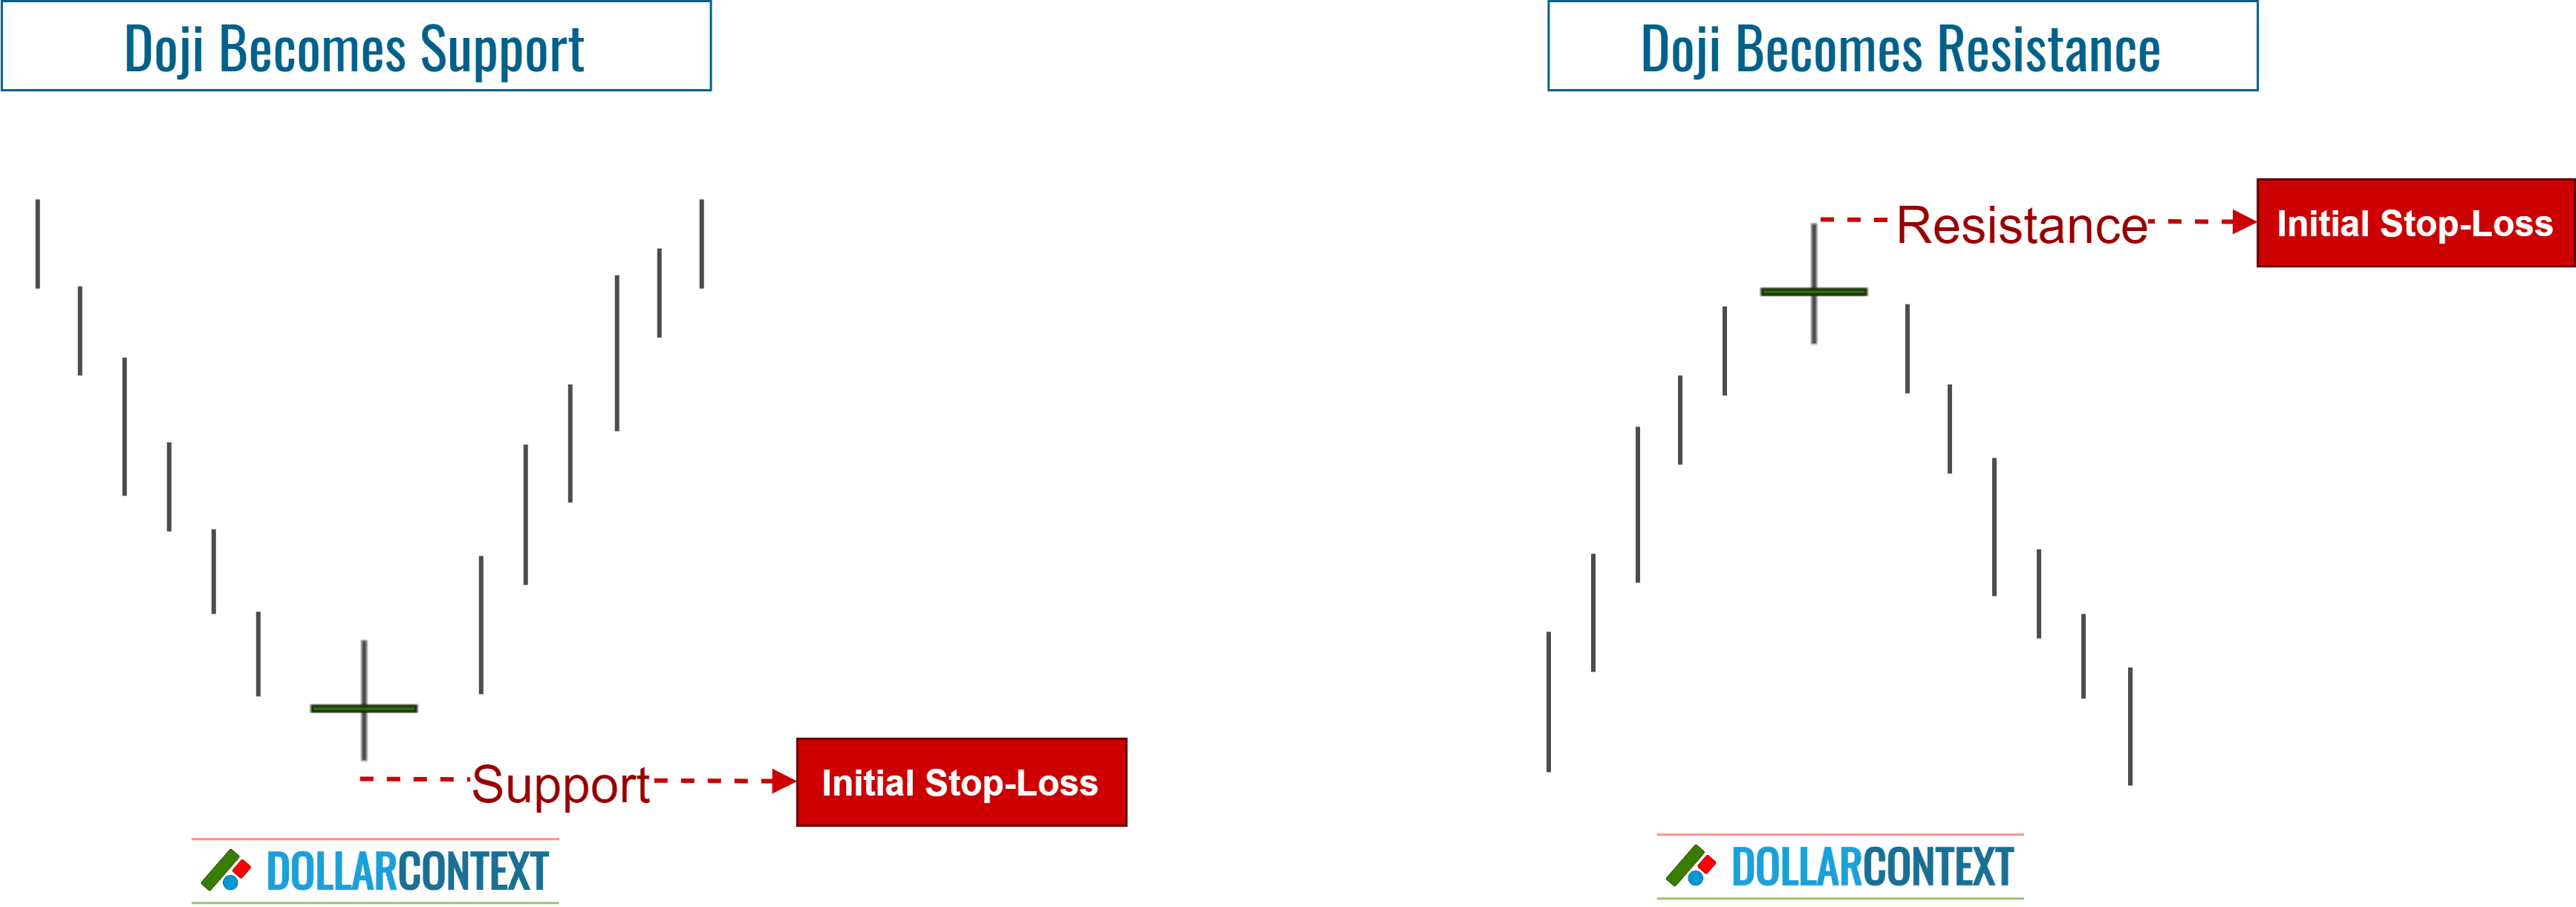 Doji Limitations: Using a Stop-Loss to Protect You Against False Signals